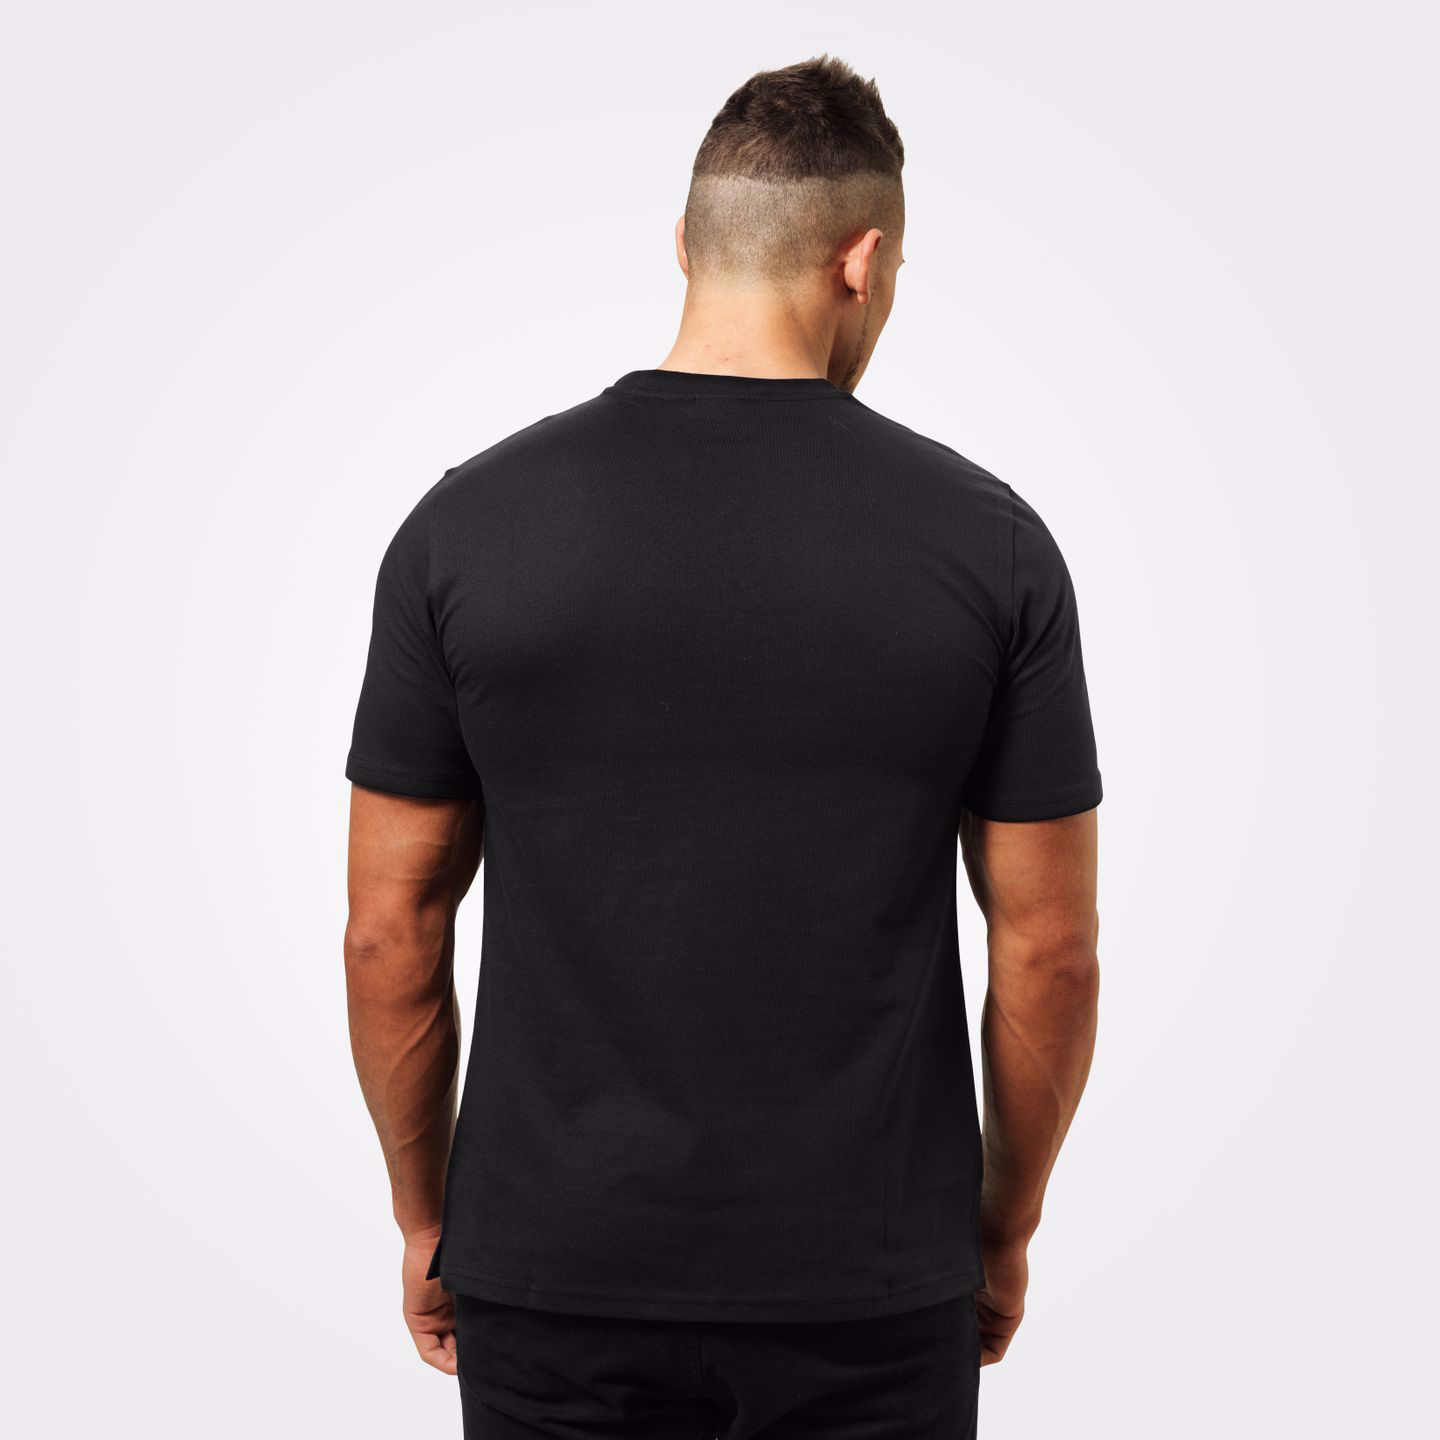 Bronx men sport t-shirt in Black | Mg Activewear UAE | Shop Pro Level ...